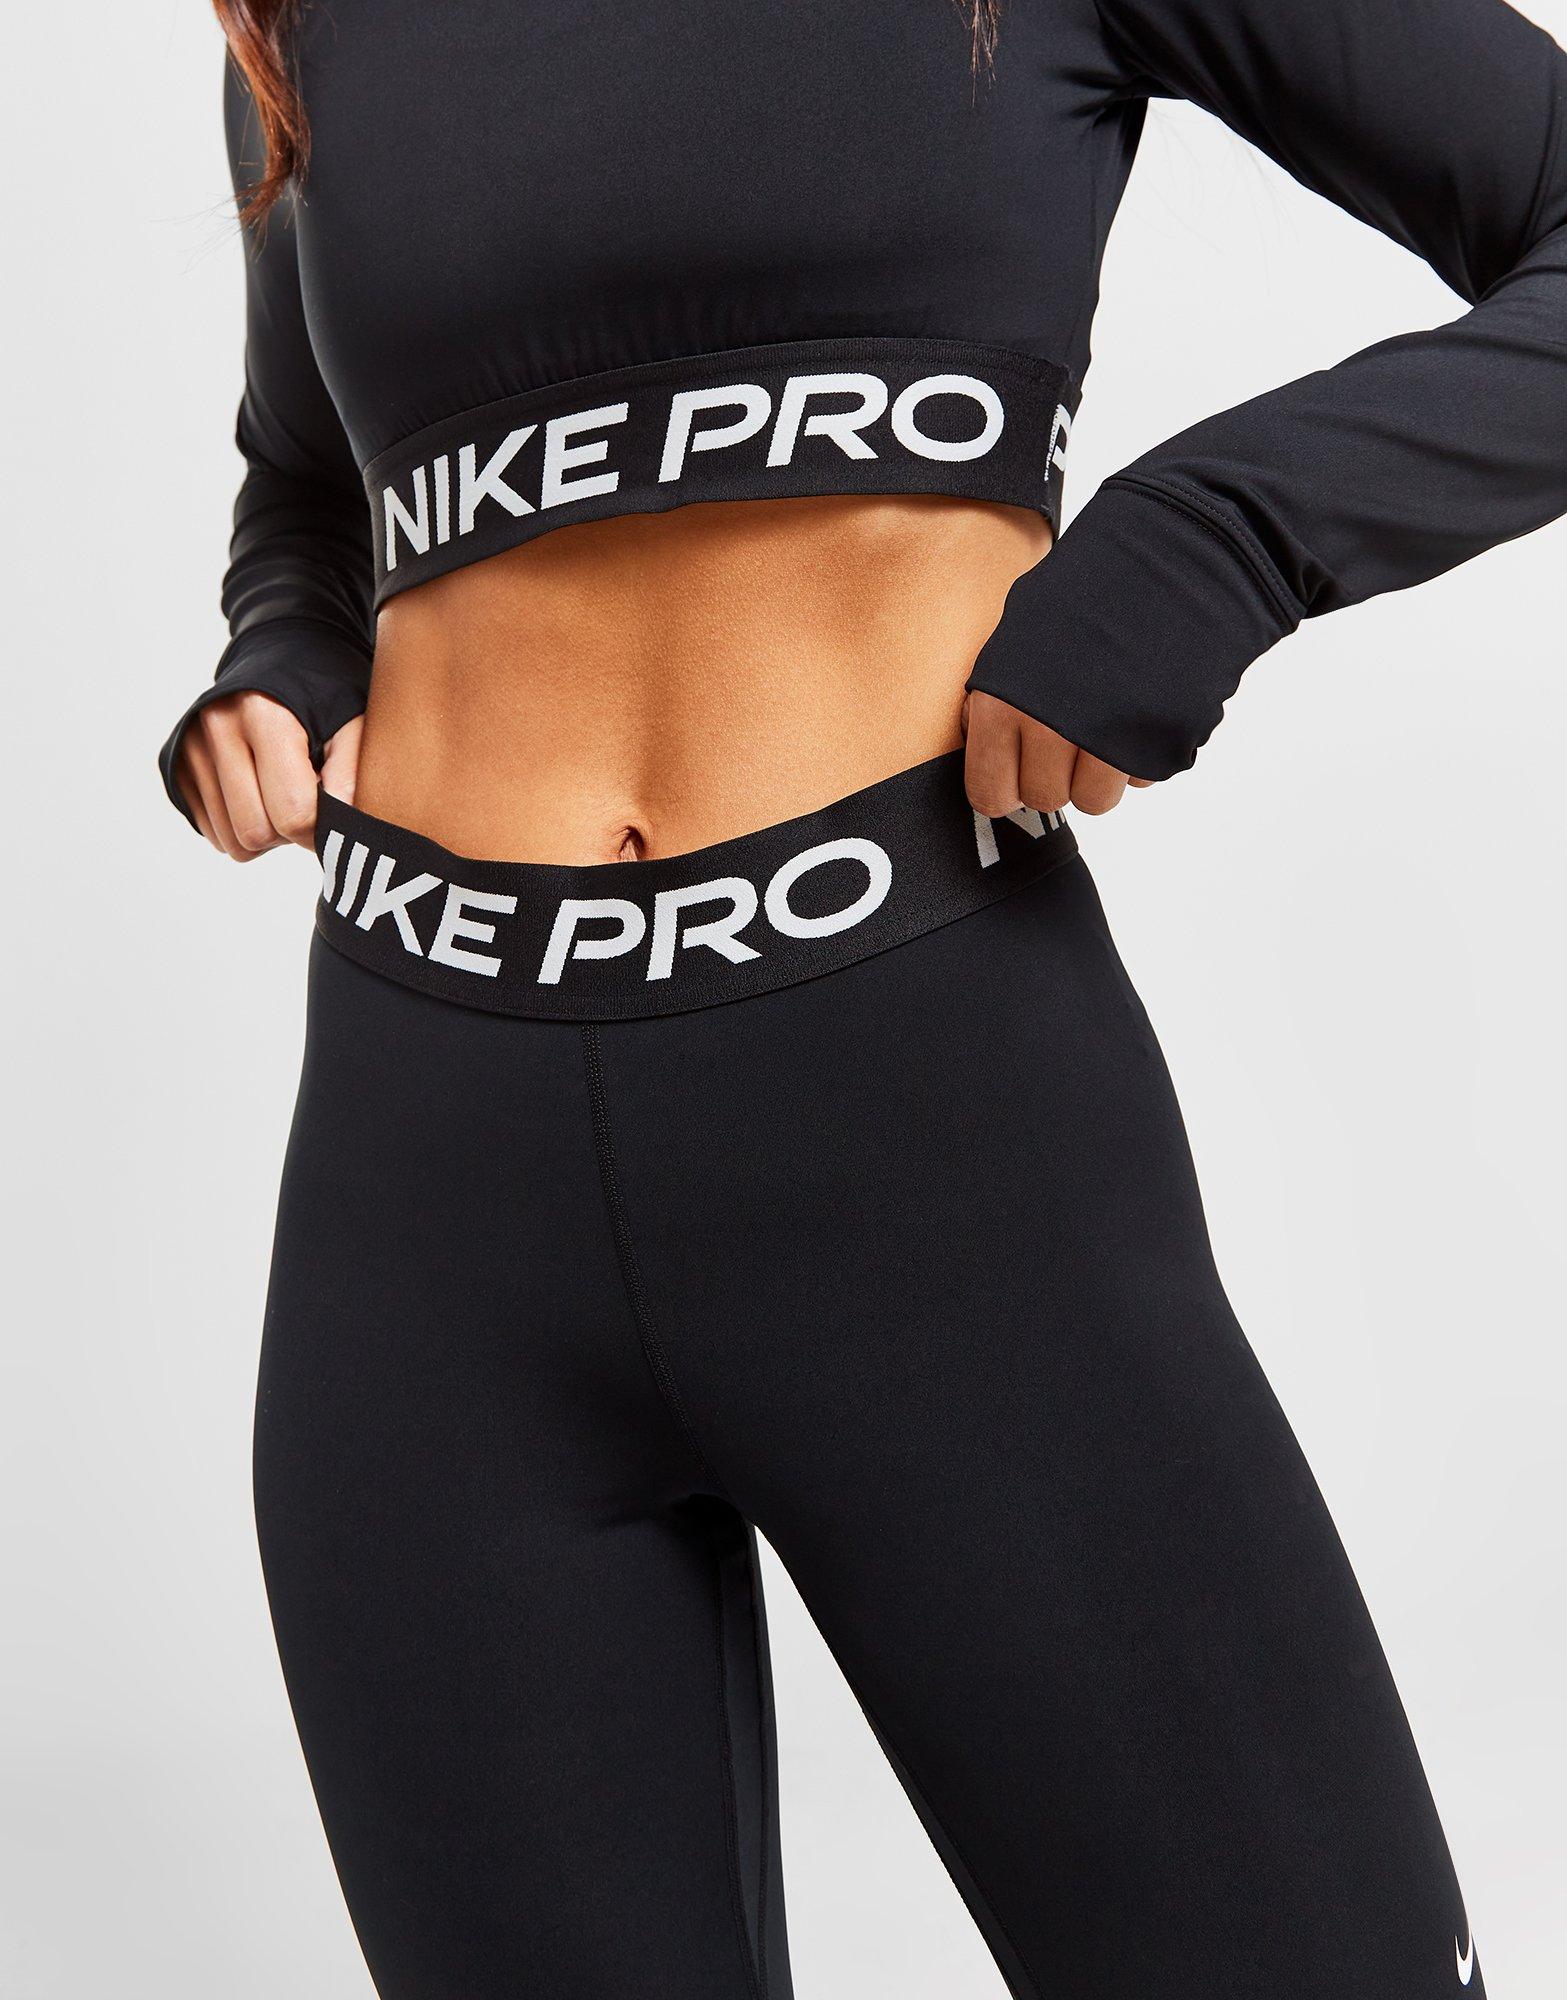 nike pro leggings women dri-fit sport jogging running gym xs to xl uk stock